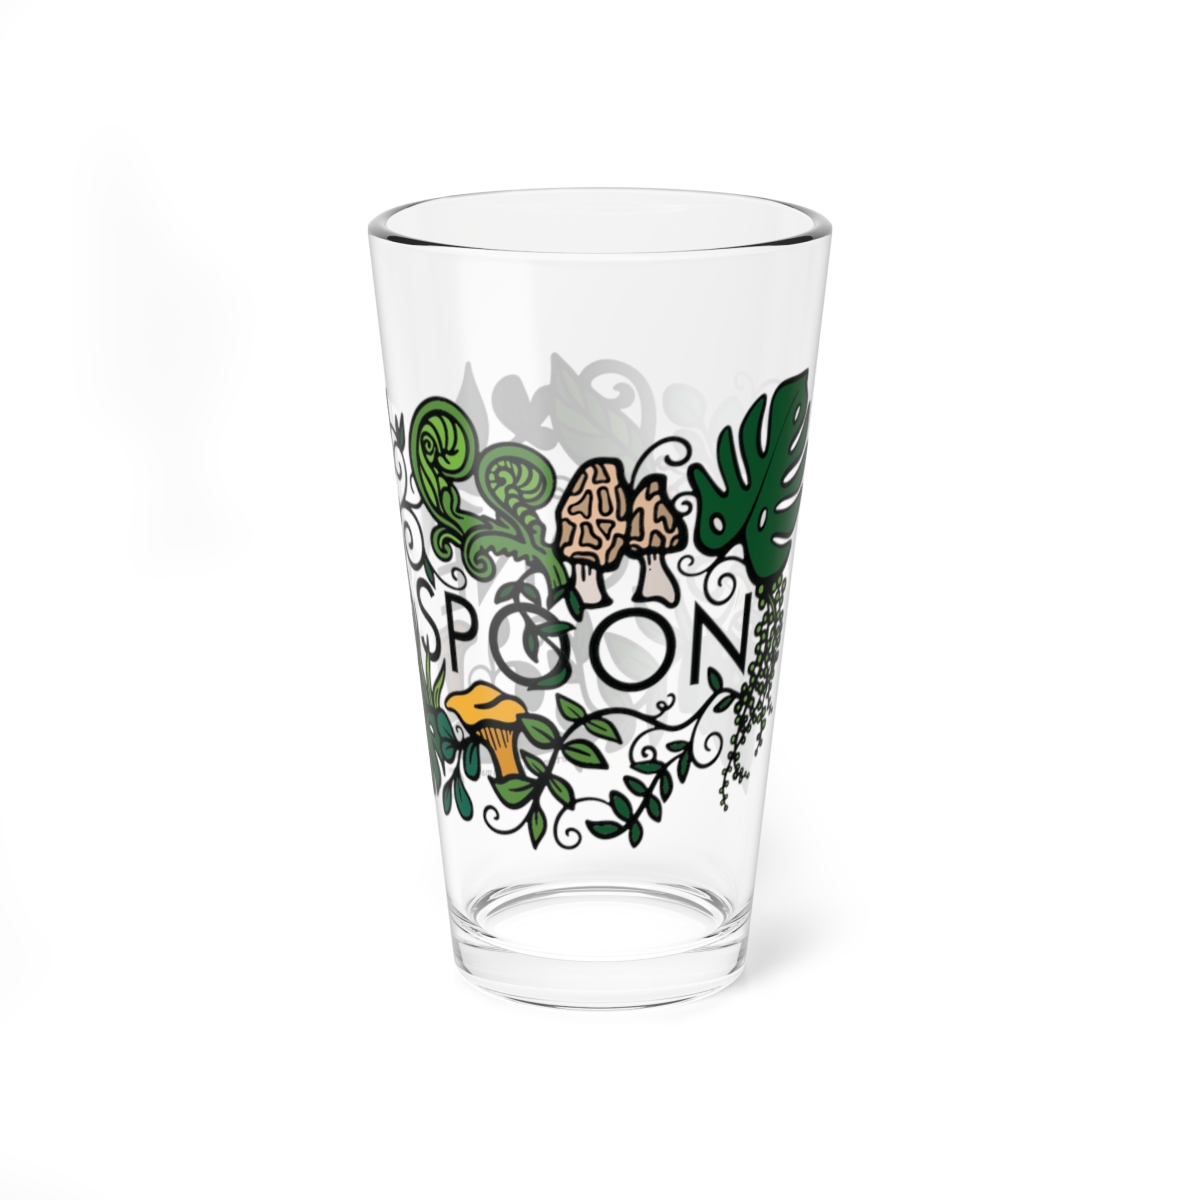 Stone & Spoon Pint Glass, 16oz product thumbnail image